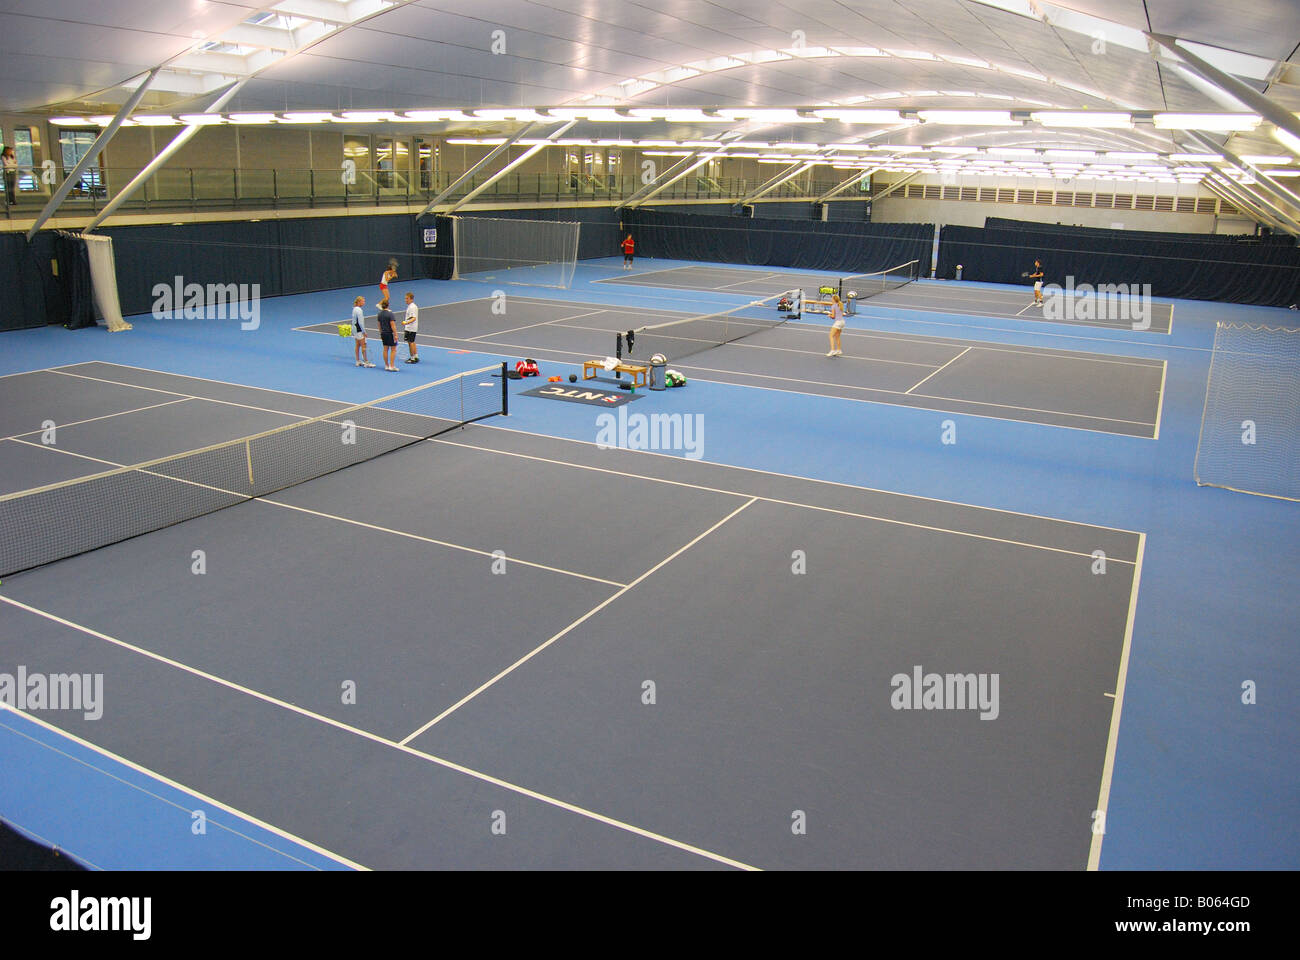 Hallenplätze, Nationales Tenniszentrum, Priory Lane, Roehampton, London Borough of Wandsworth, Greater London, England, Vereinigtes Königreich Stockfoto